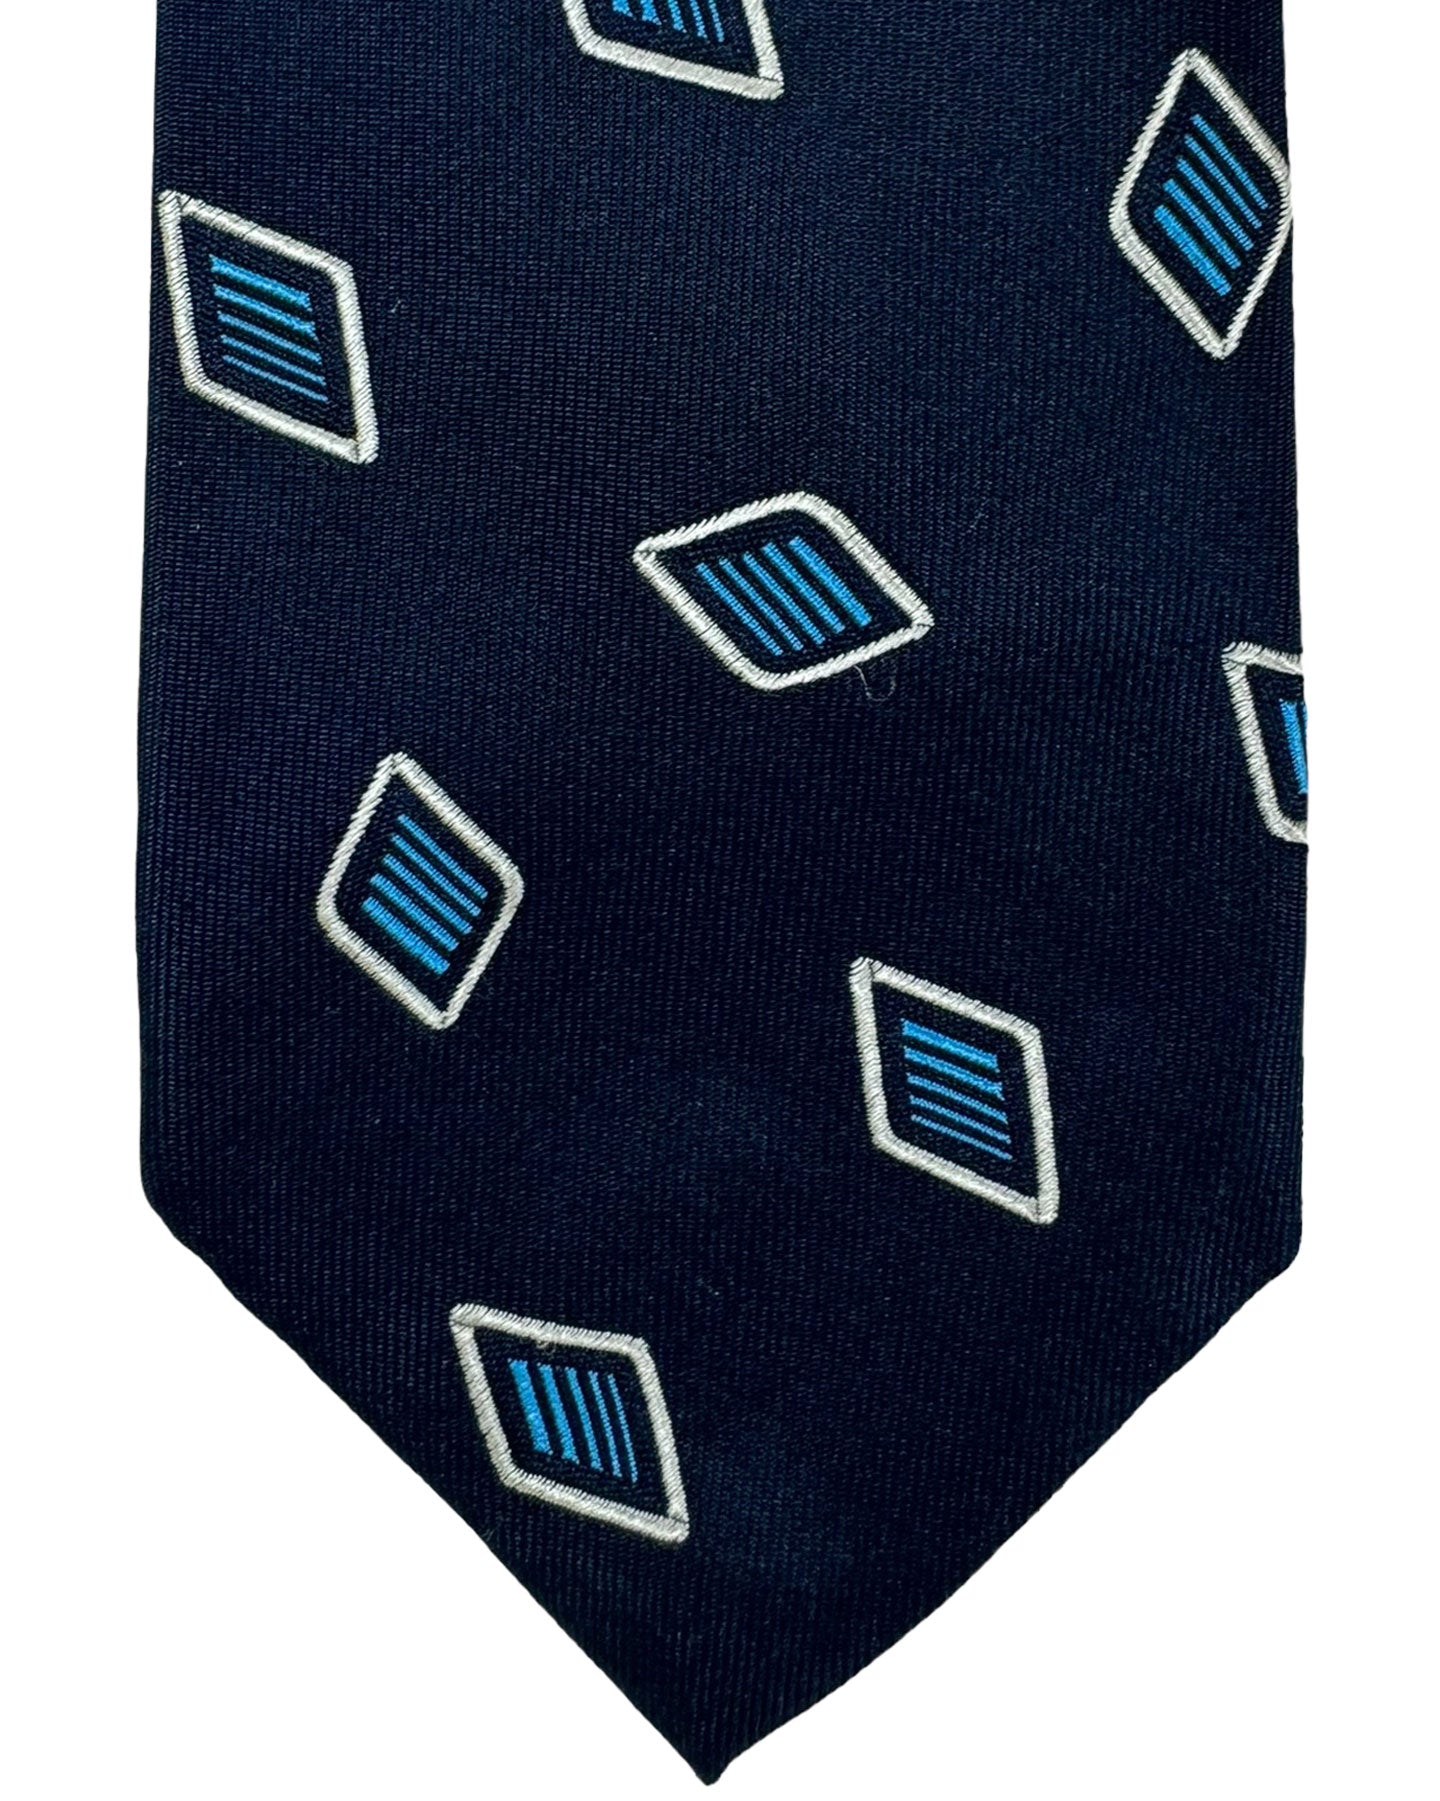 Barba Sevenfold Tie Navy Aqua Blue Diamonds Design - Sartorial Neckwear